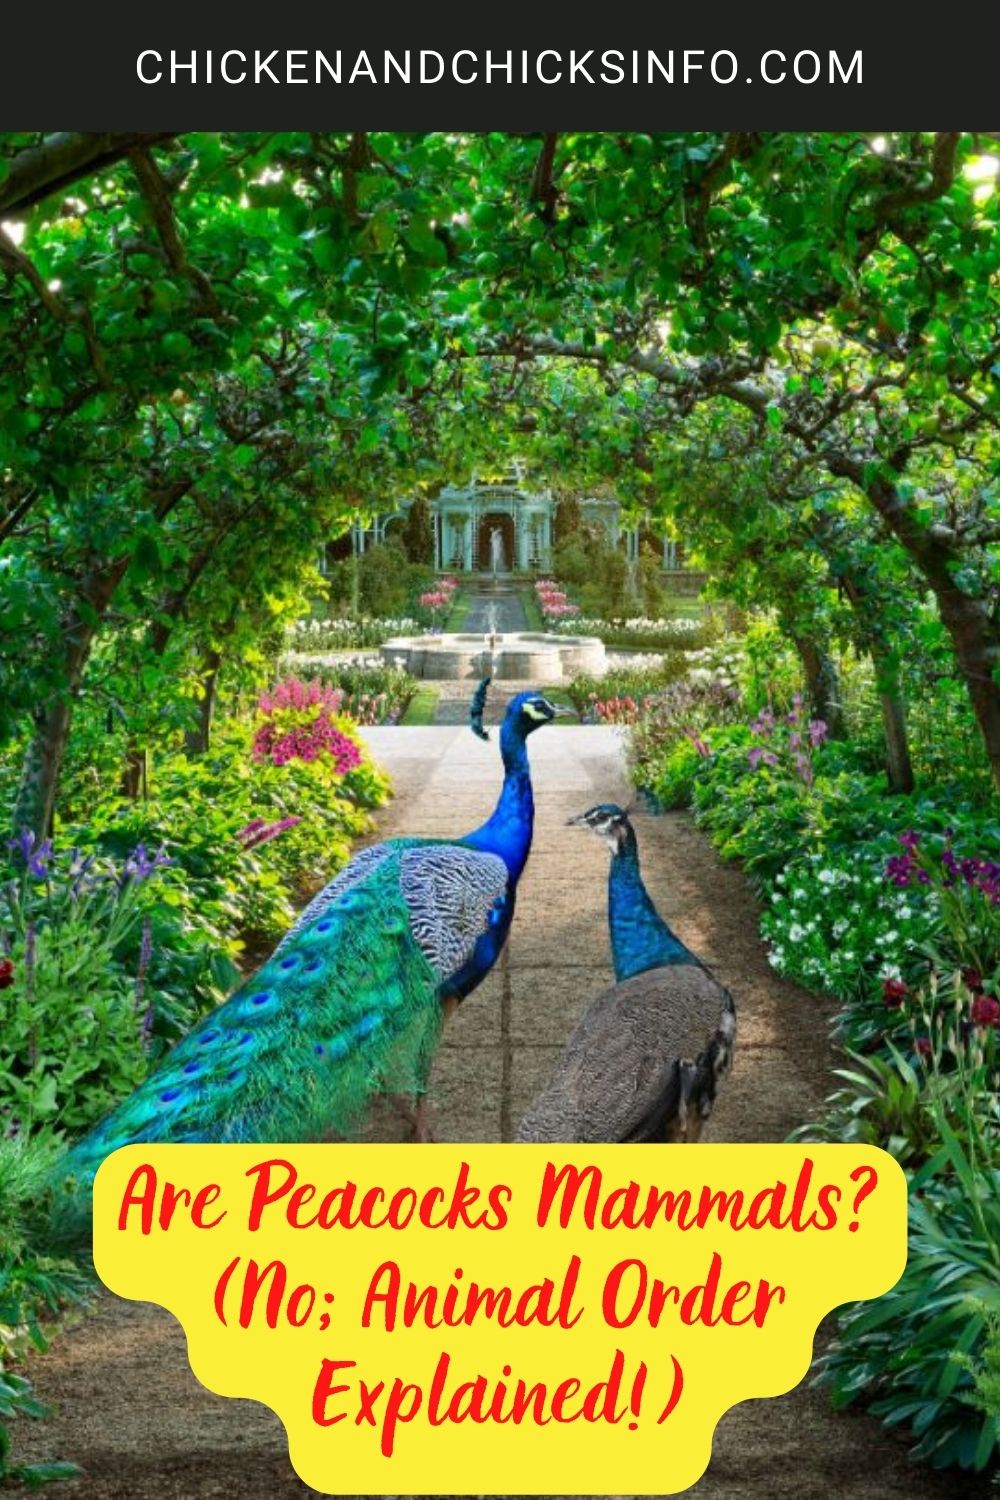 Are Peacocks Mammals? poster